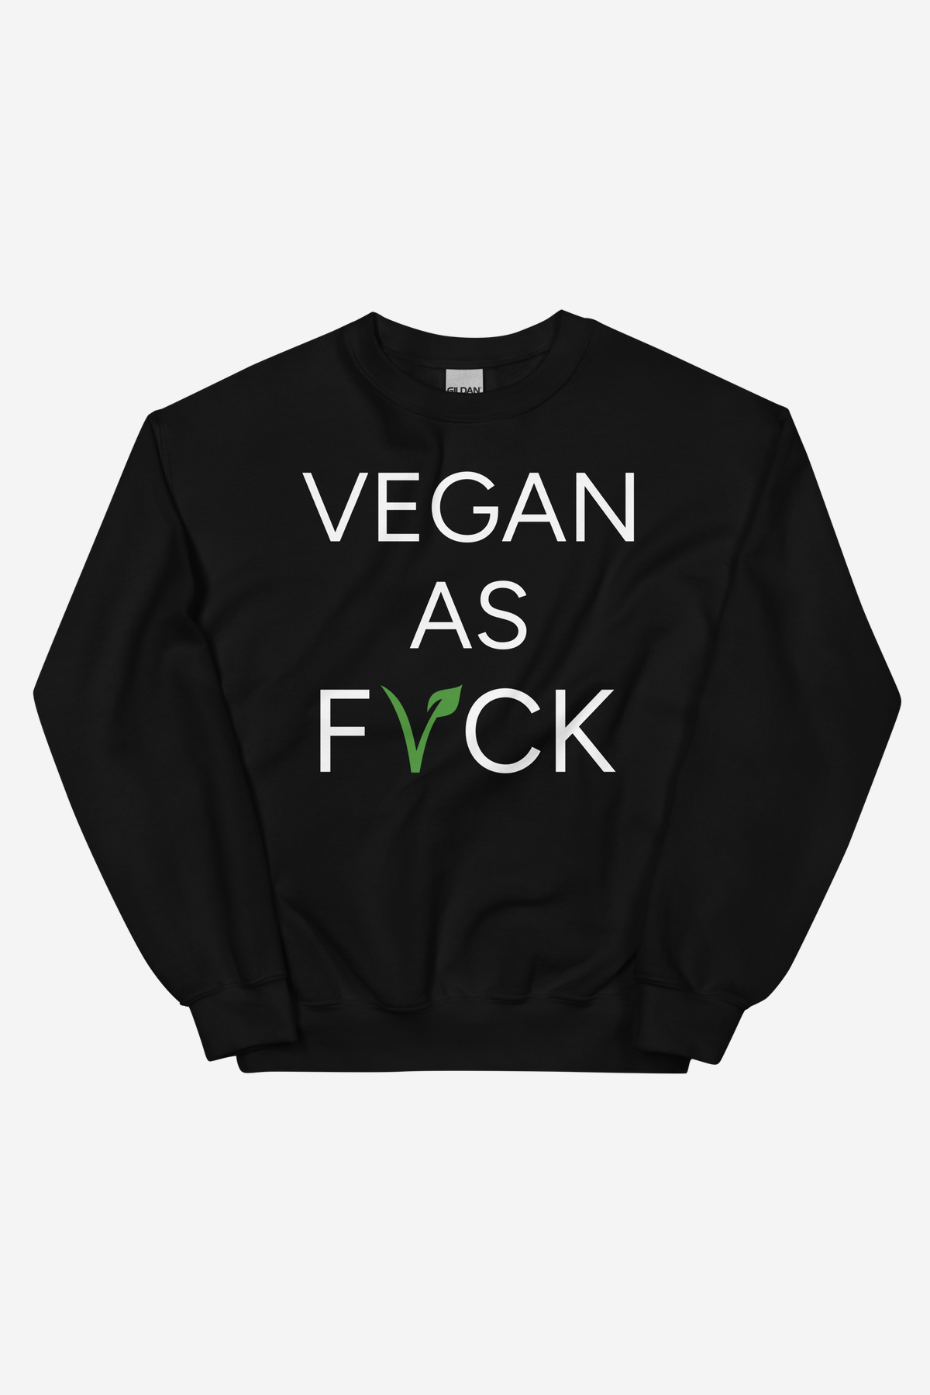 Vegan As Fvck Unisex Sweatshirt